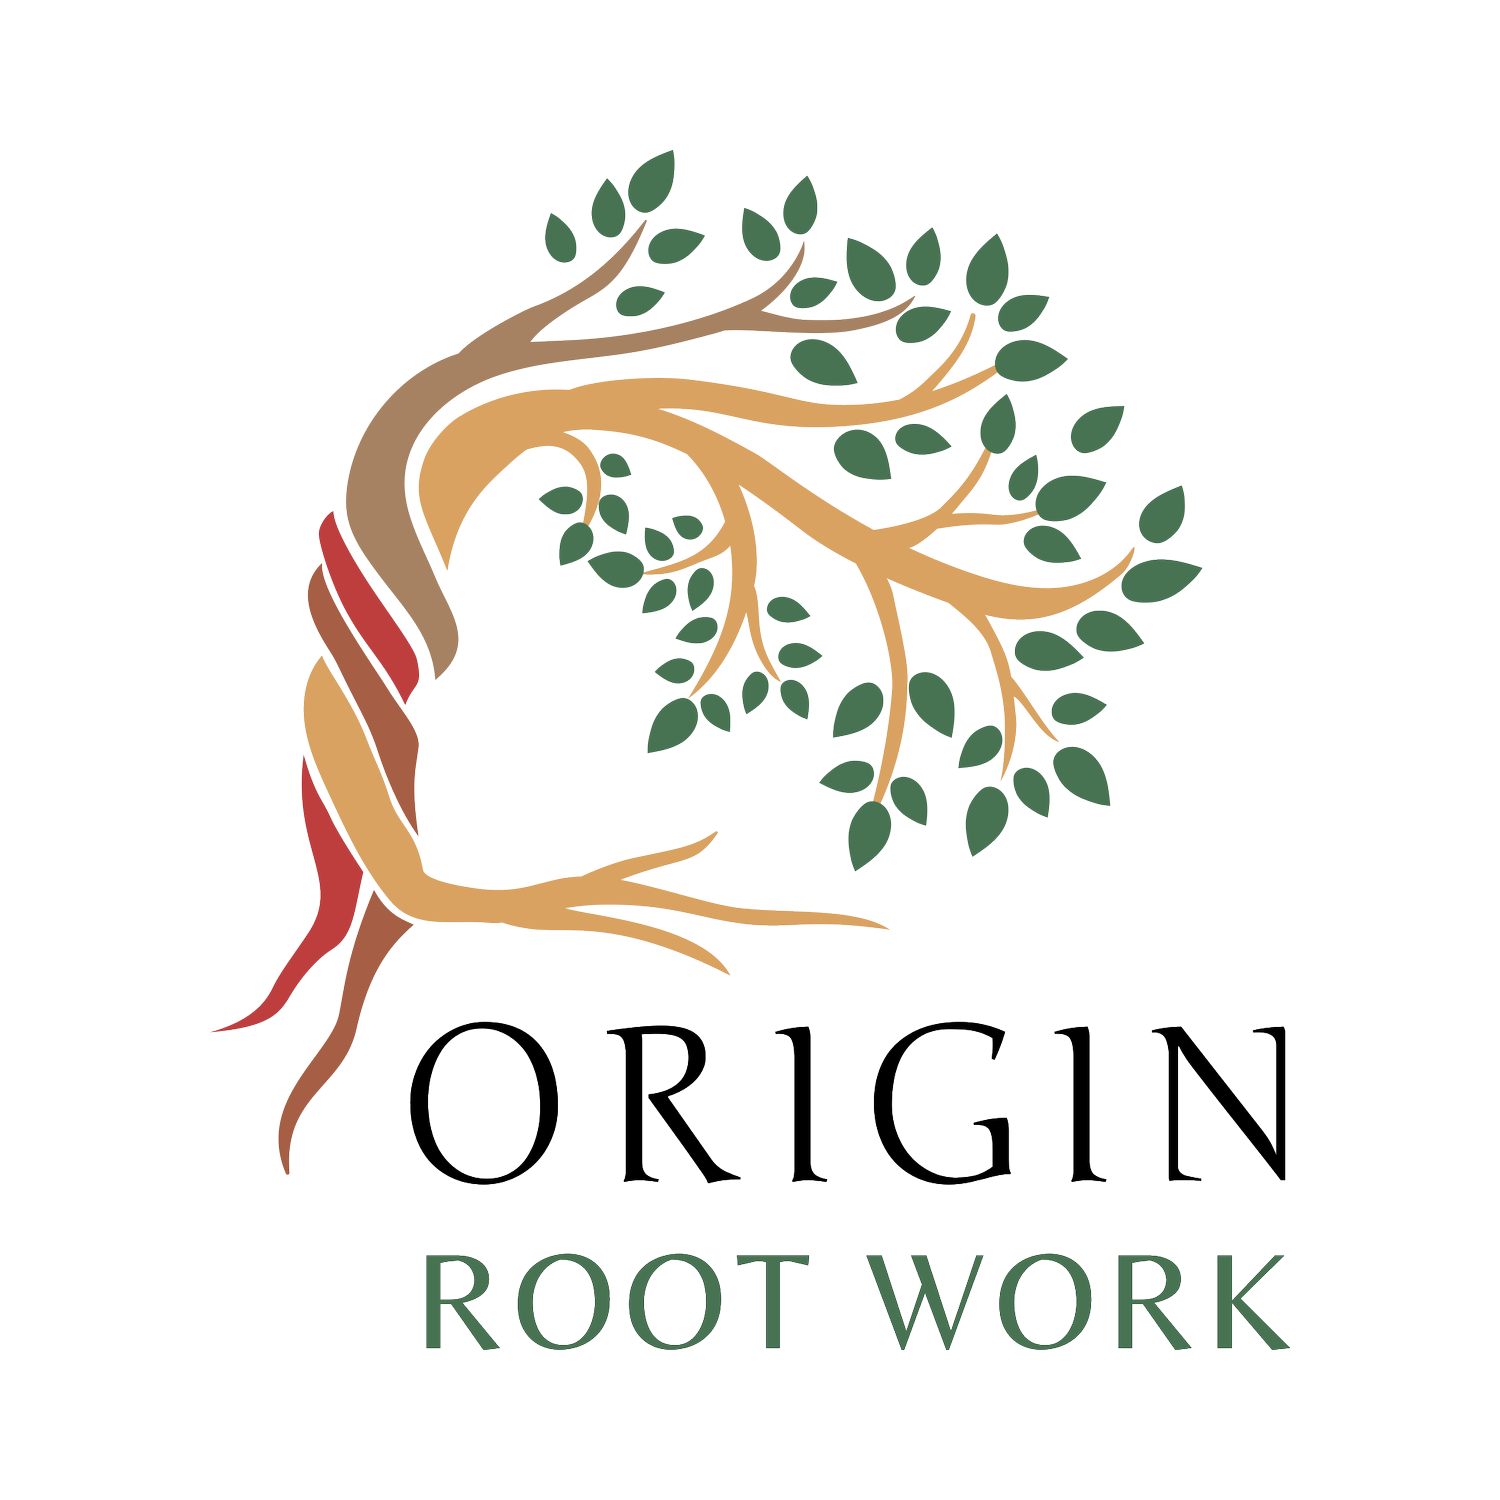 Origin Root Work